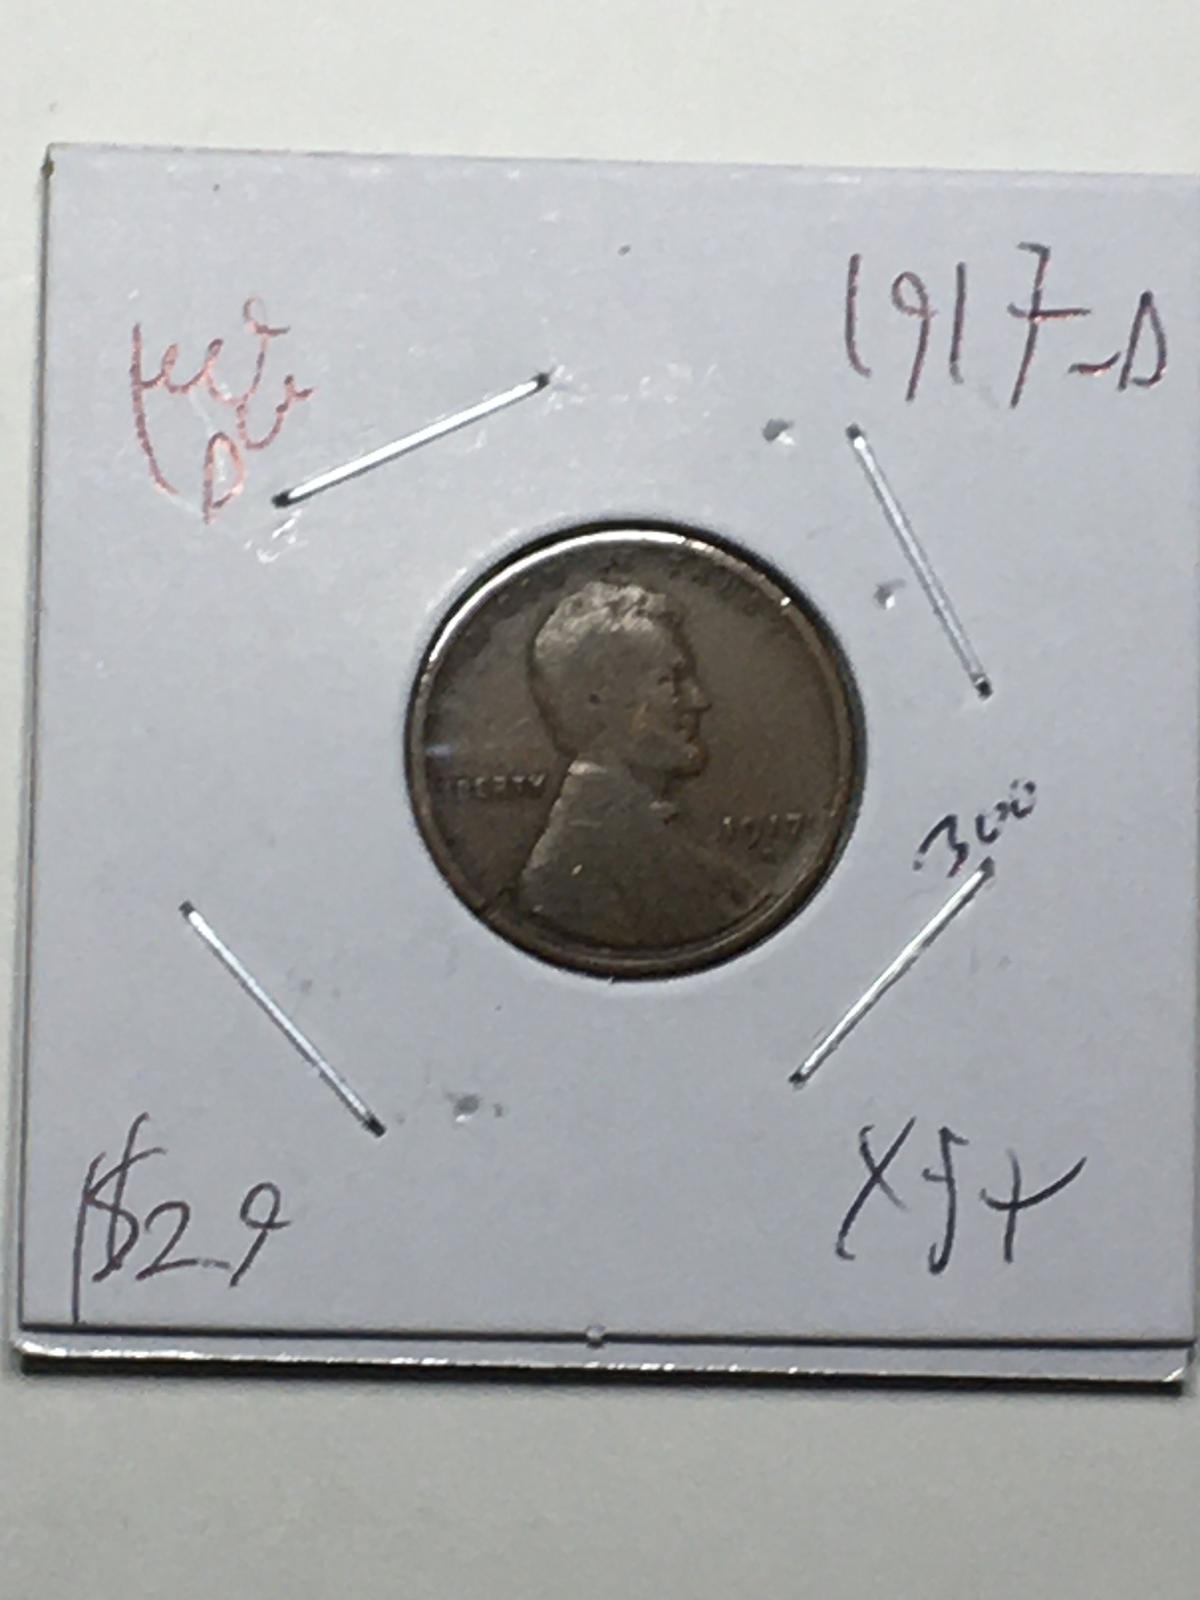 Lincoln Wheat Cent 1917 D Key Date Better Grade